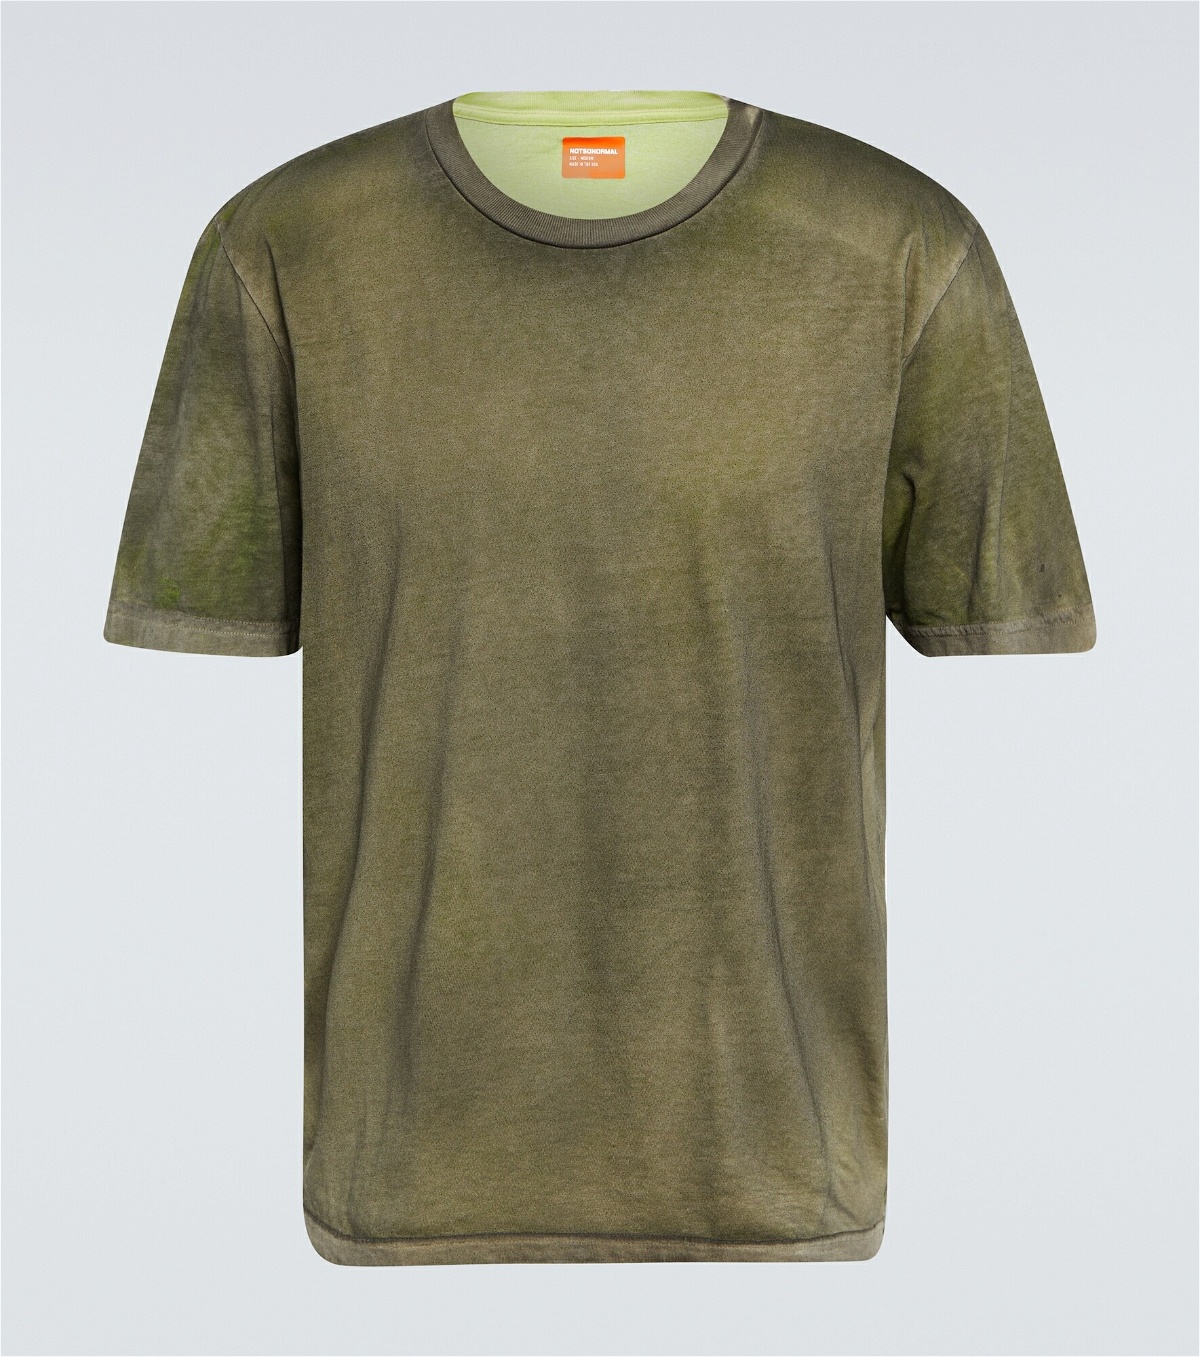 NotSoNormal - Sprayed cotton jersey T-shirt